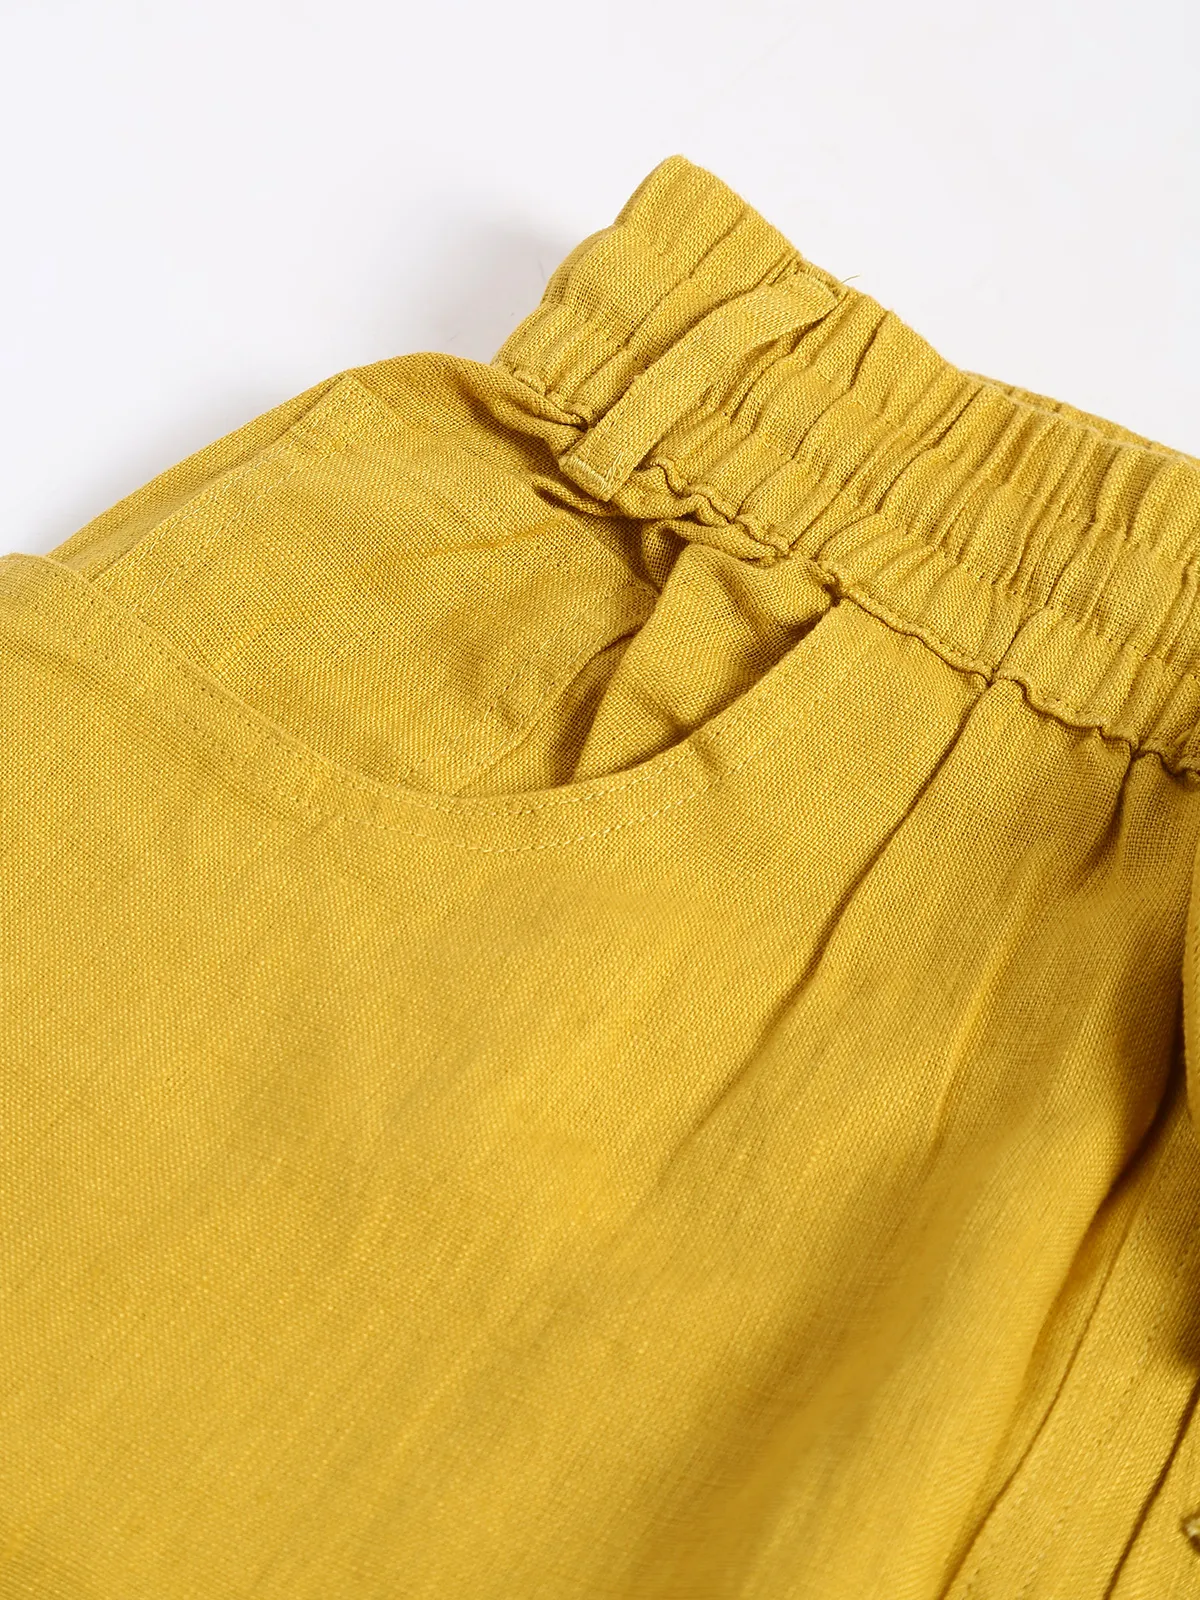 Boom mustard yellow cotton pant